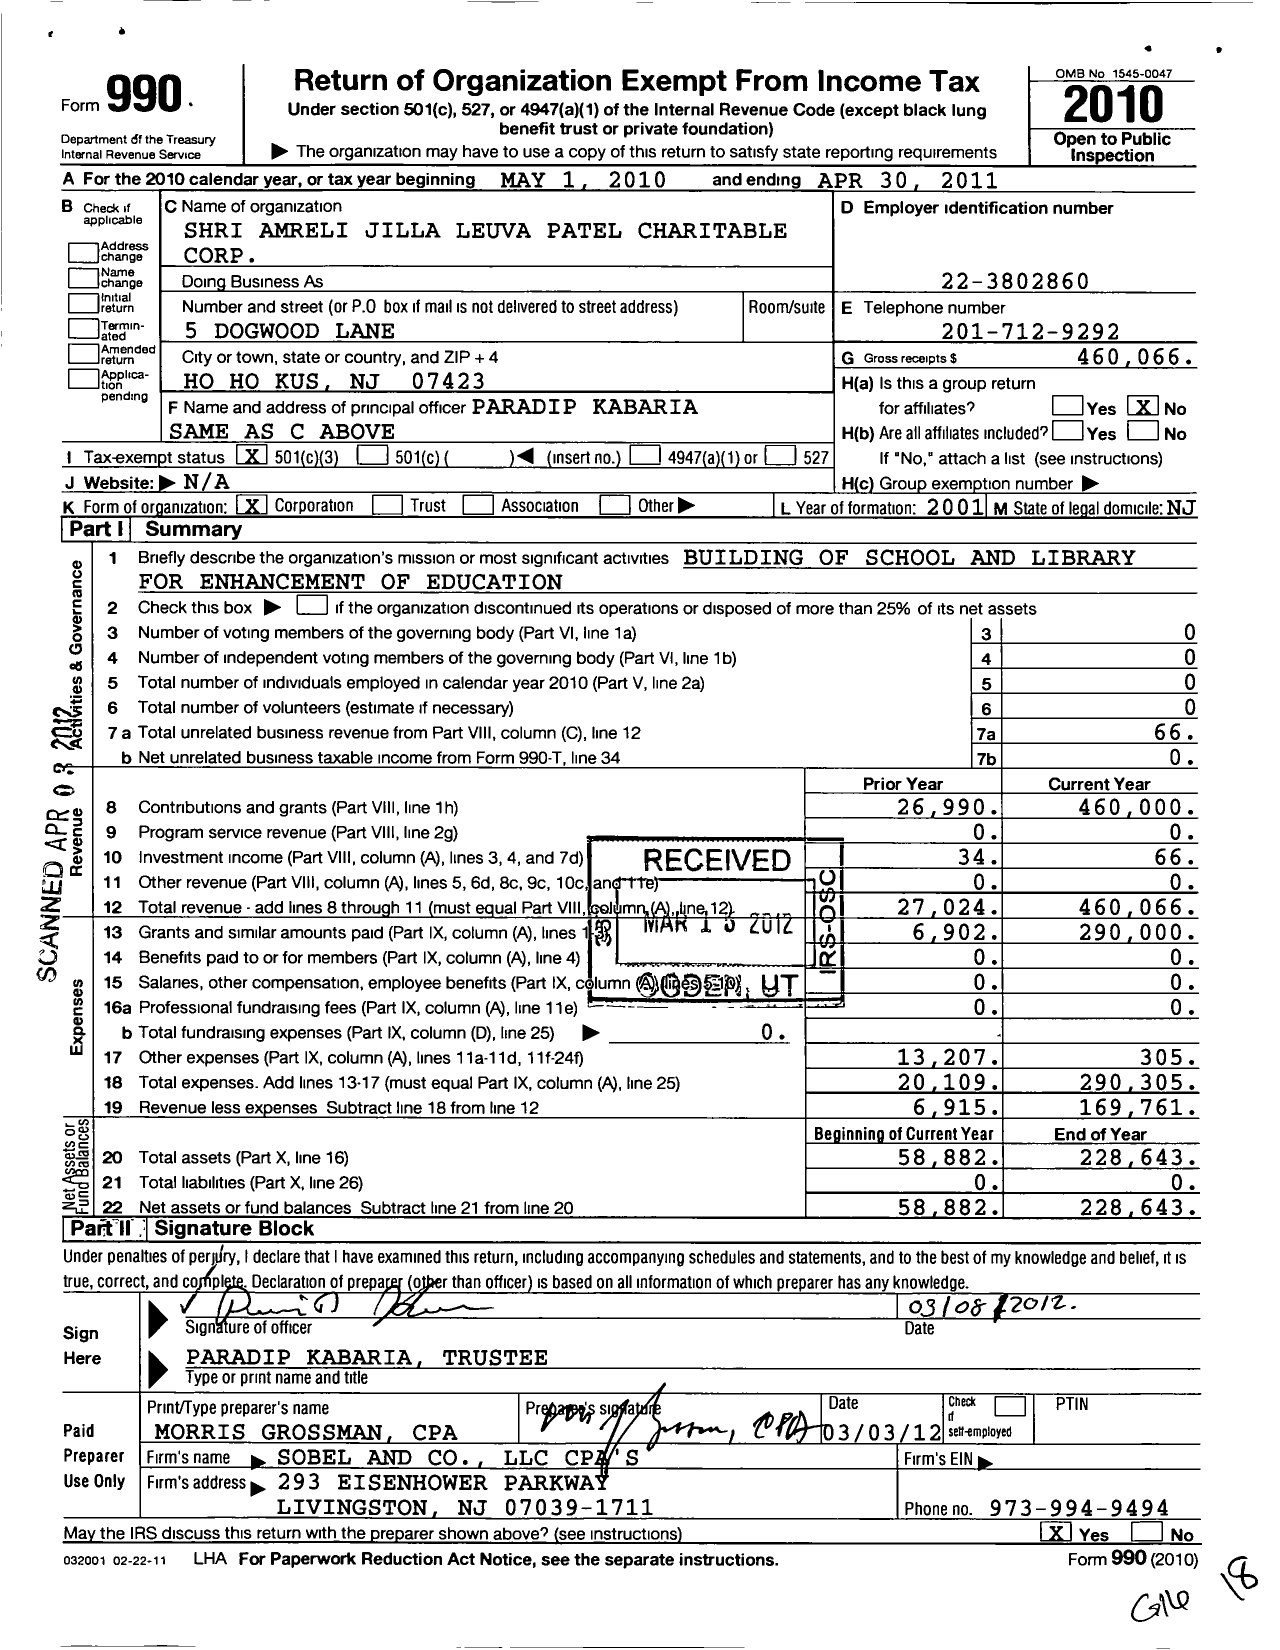 Image of first page of 2010 Form 990 for Shri Amreli Jilla Leuva Patel Charitable Corporation